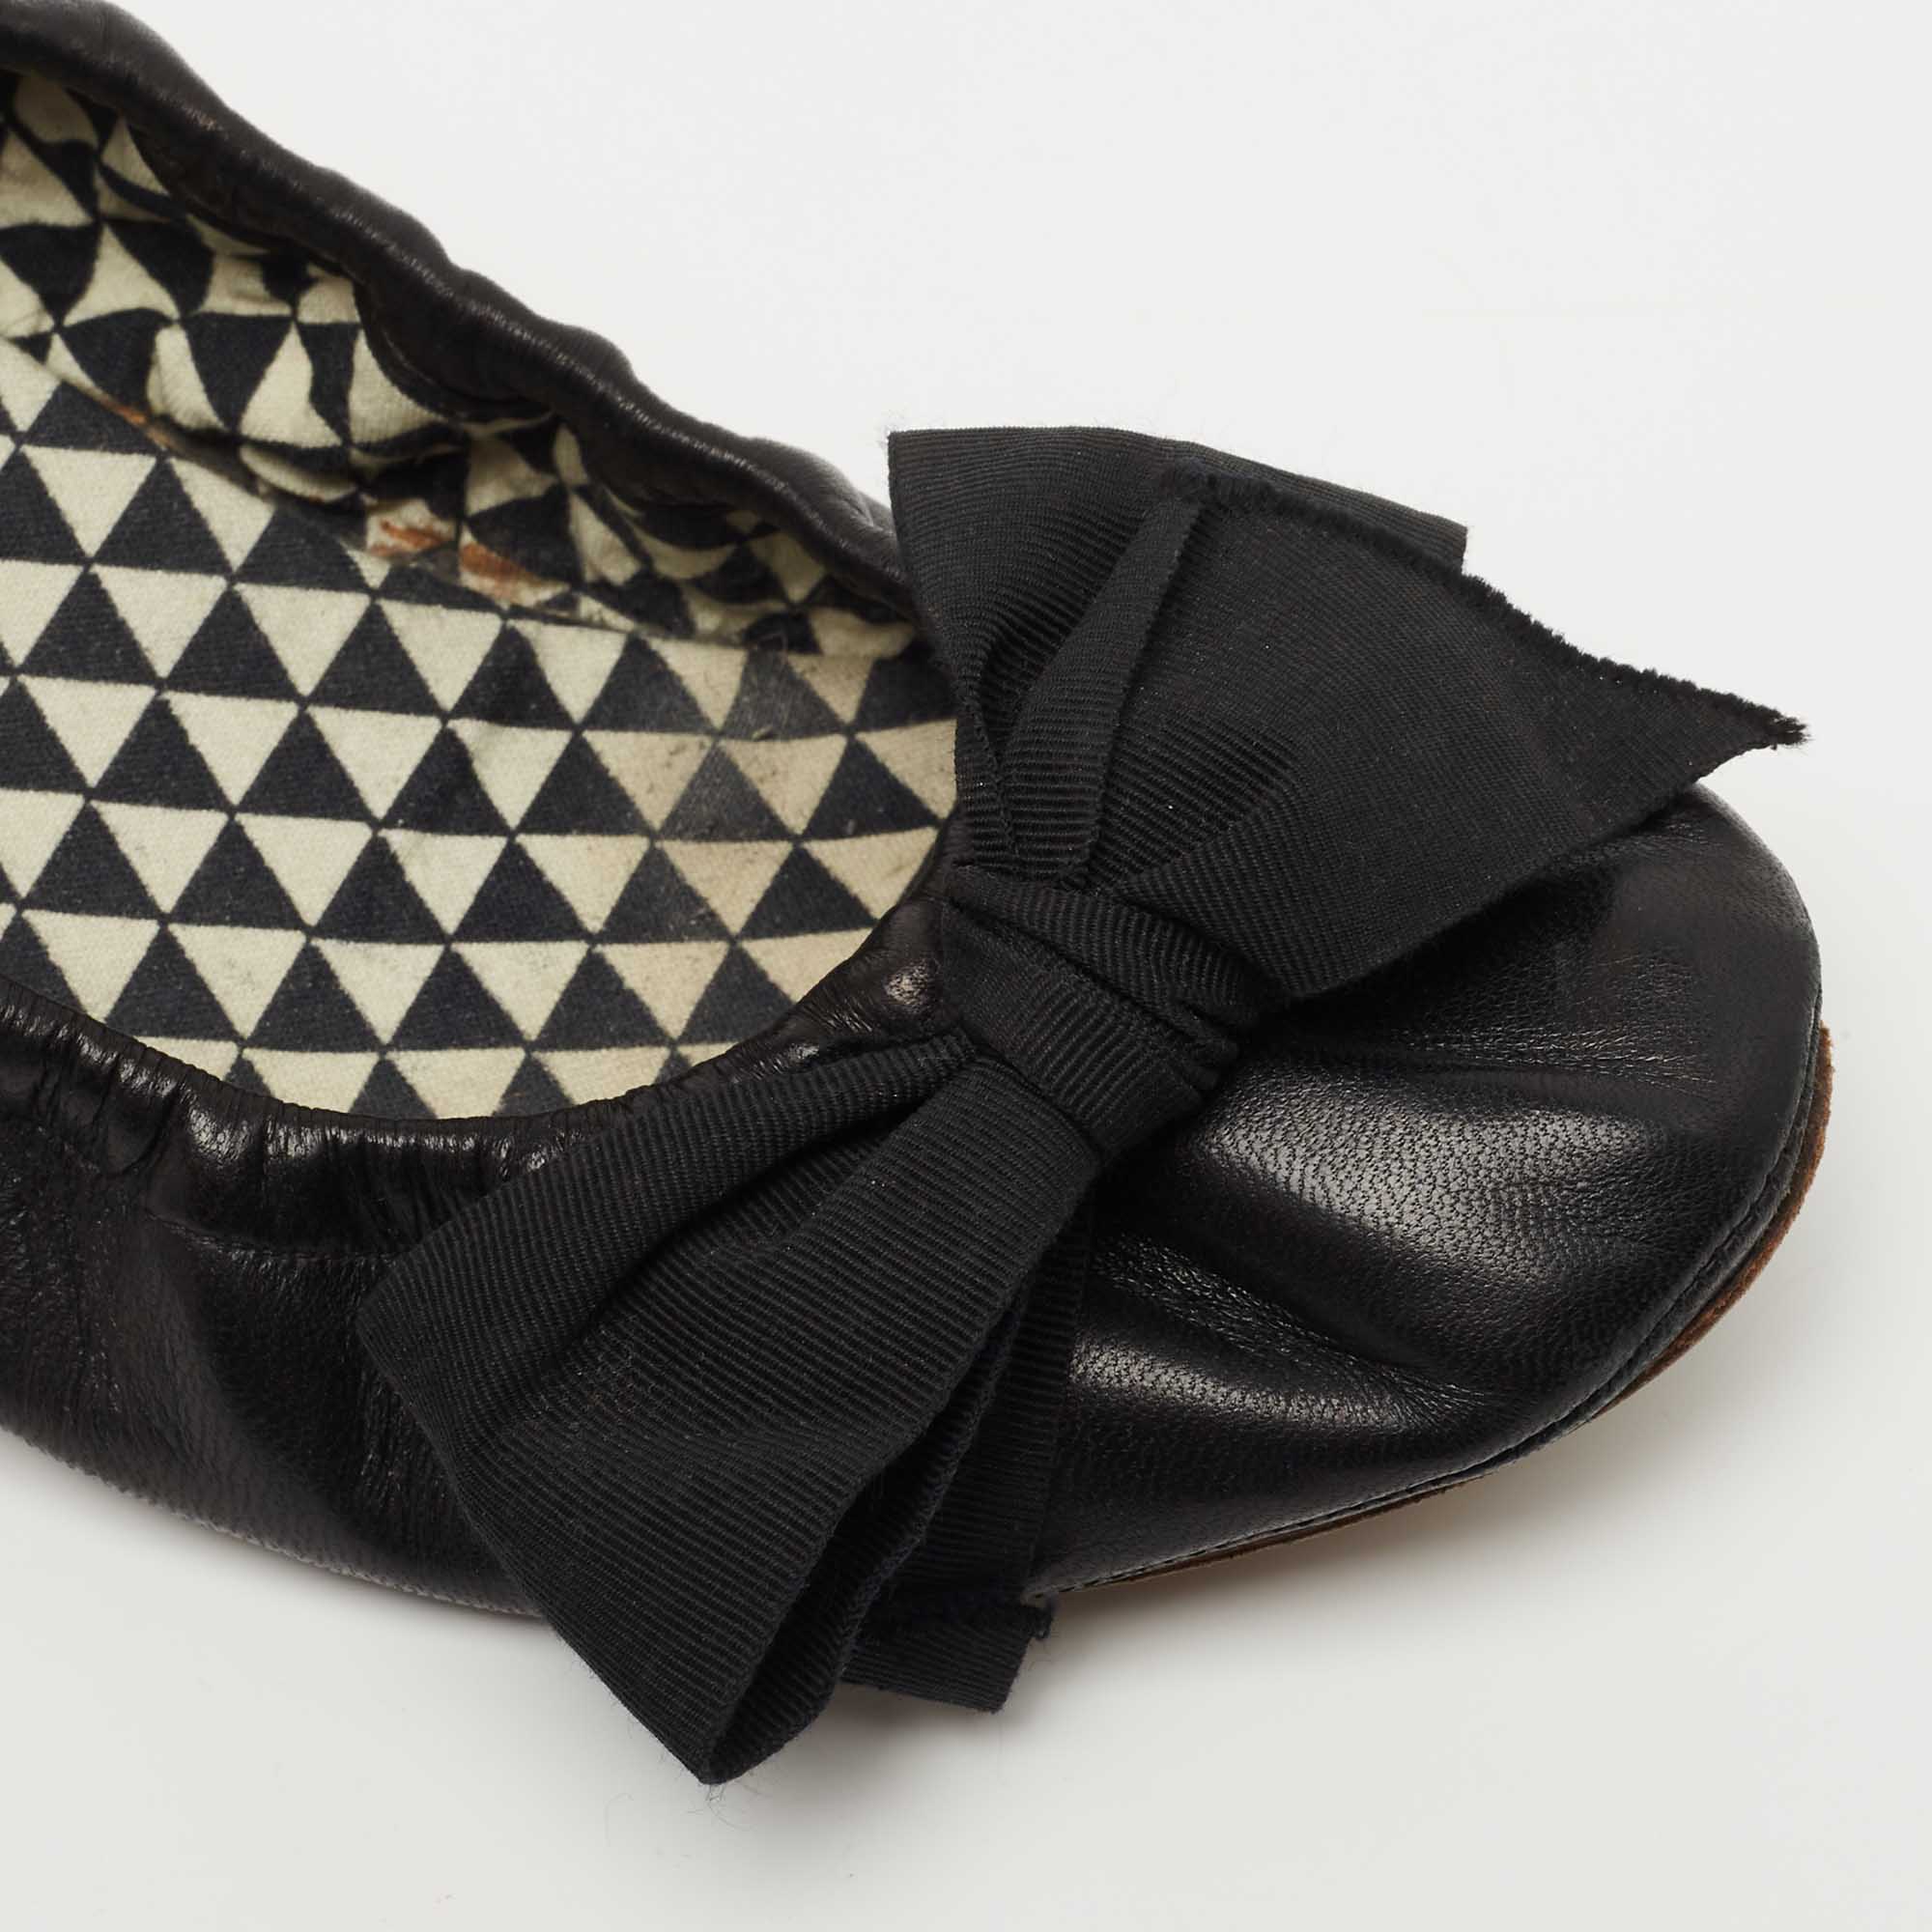 Isabel Marant Black Leather Bow Ballet Flats Size 40